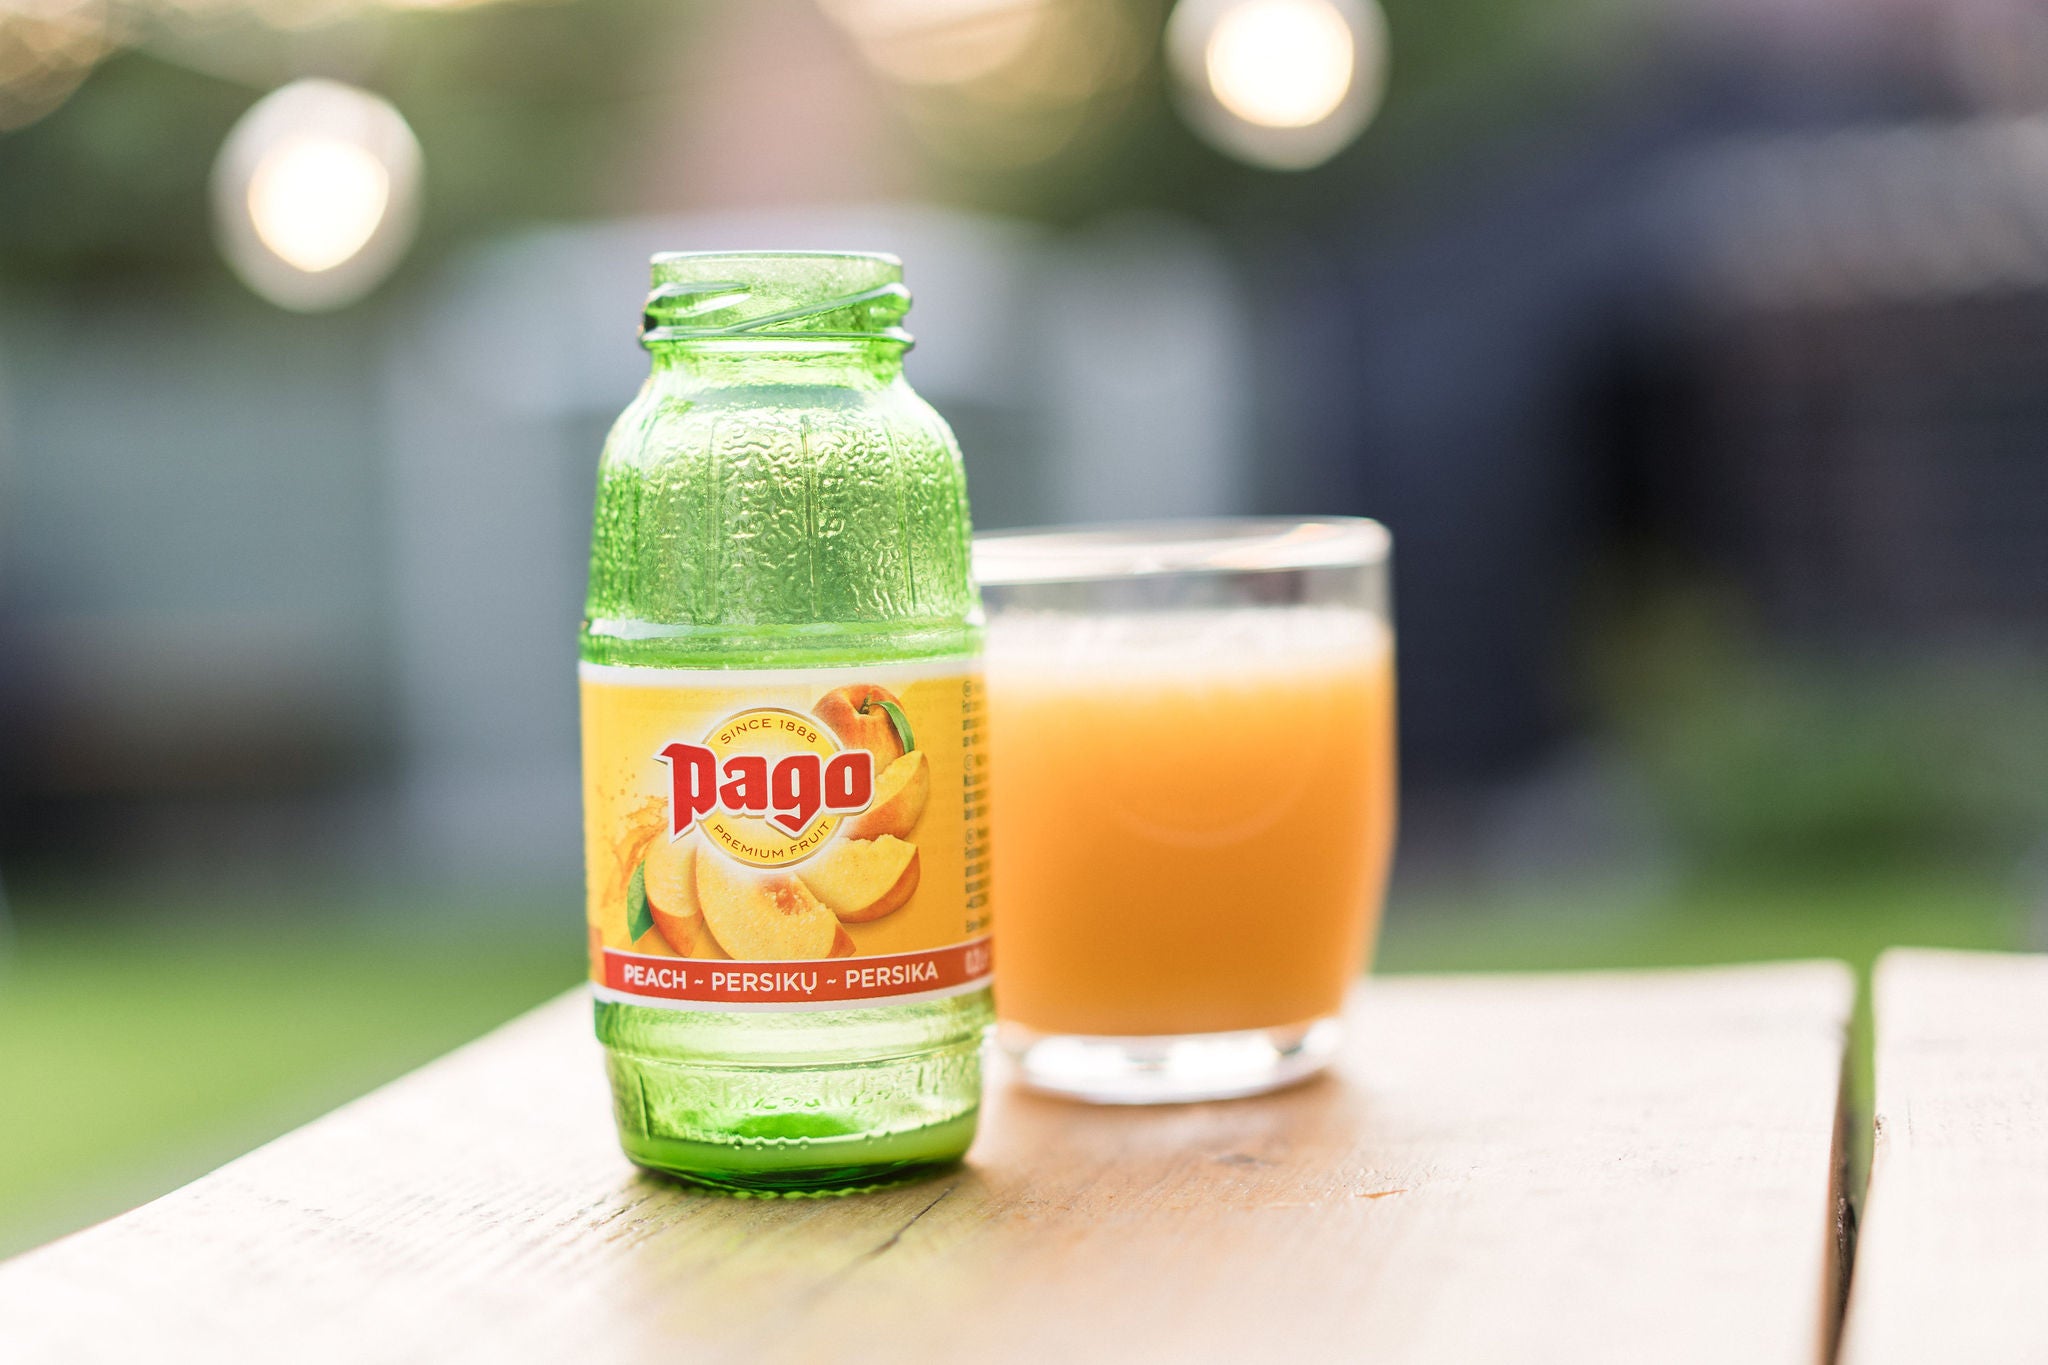 Pago Peach Juice (Single Bottle) - Pago Premium Fruit Juice Store